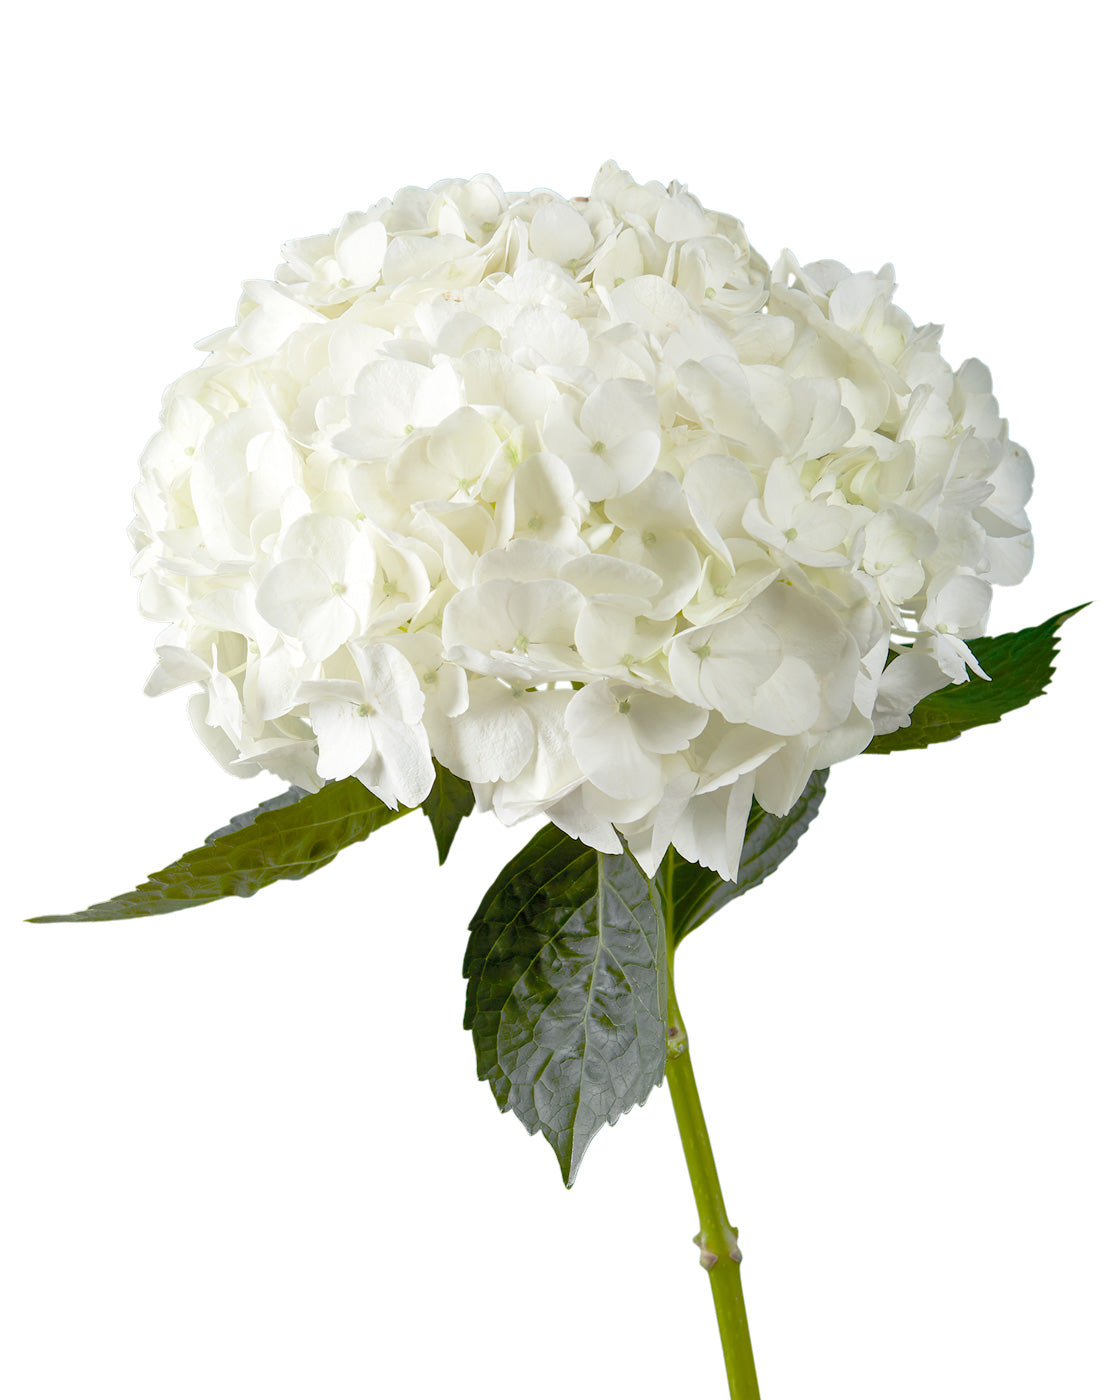 Premium White Hydrangea